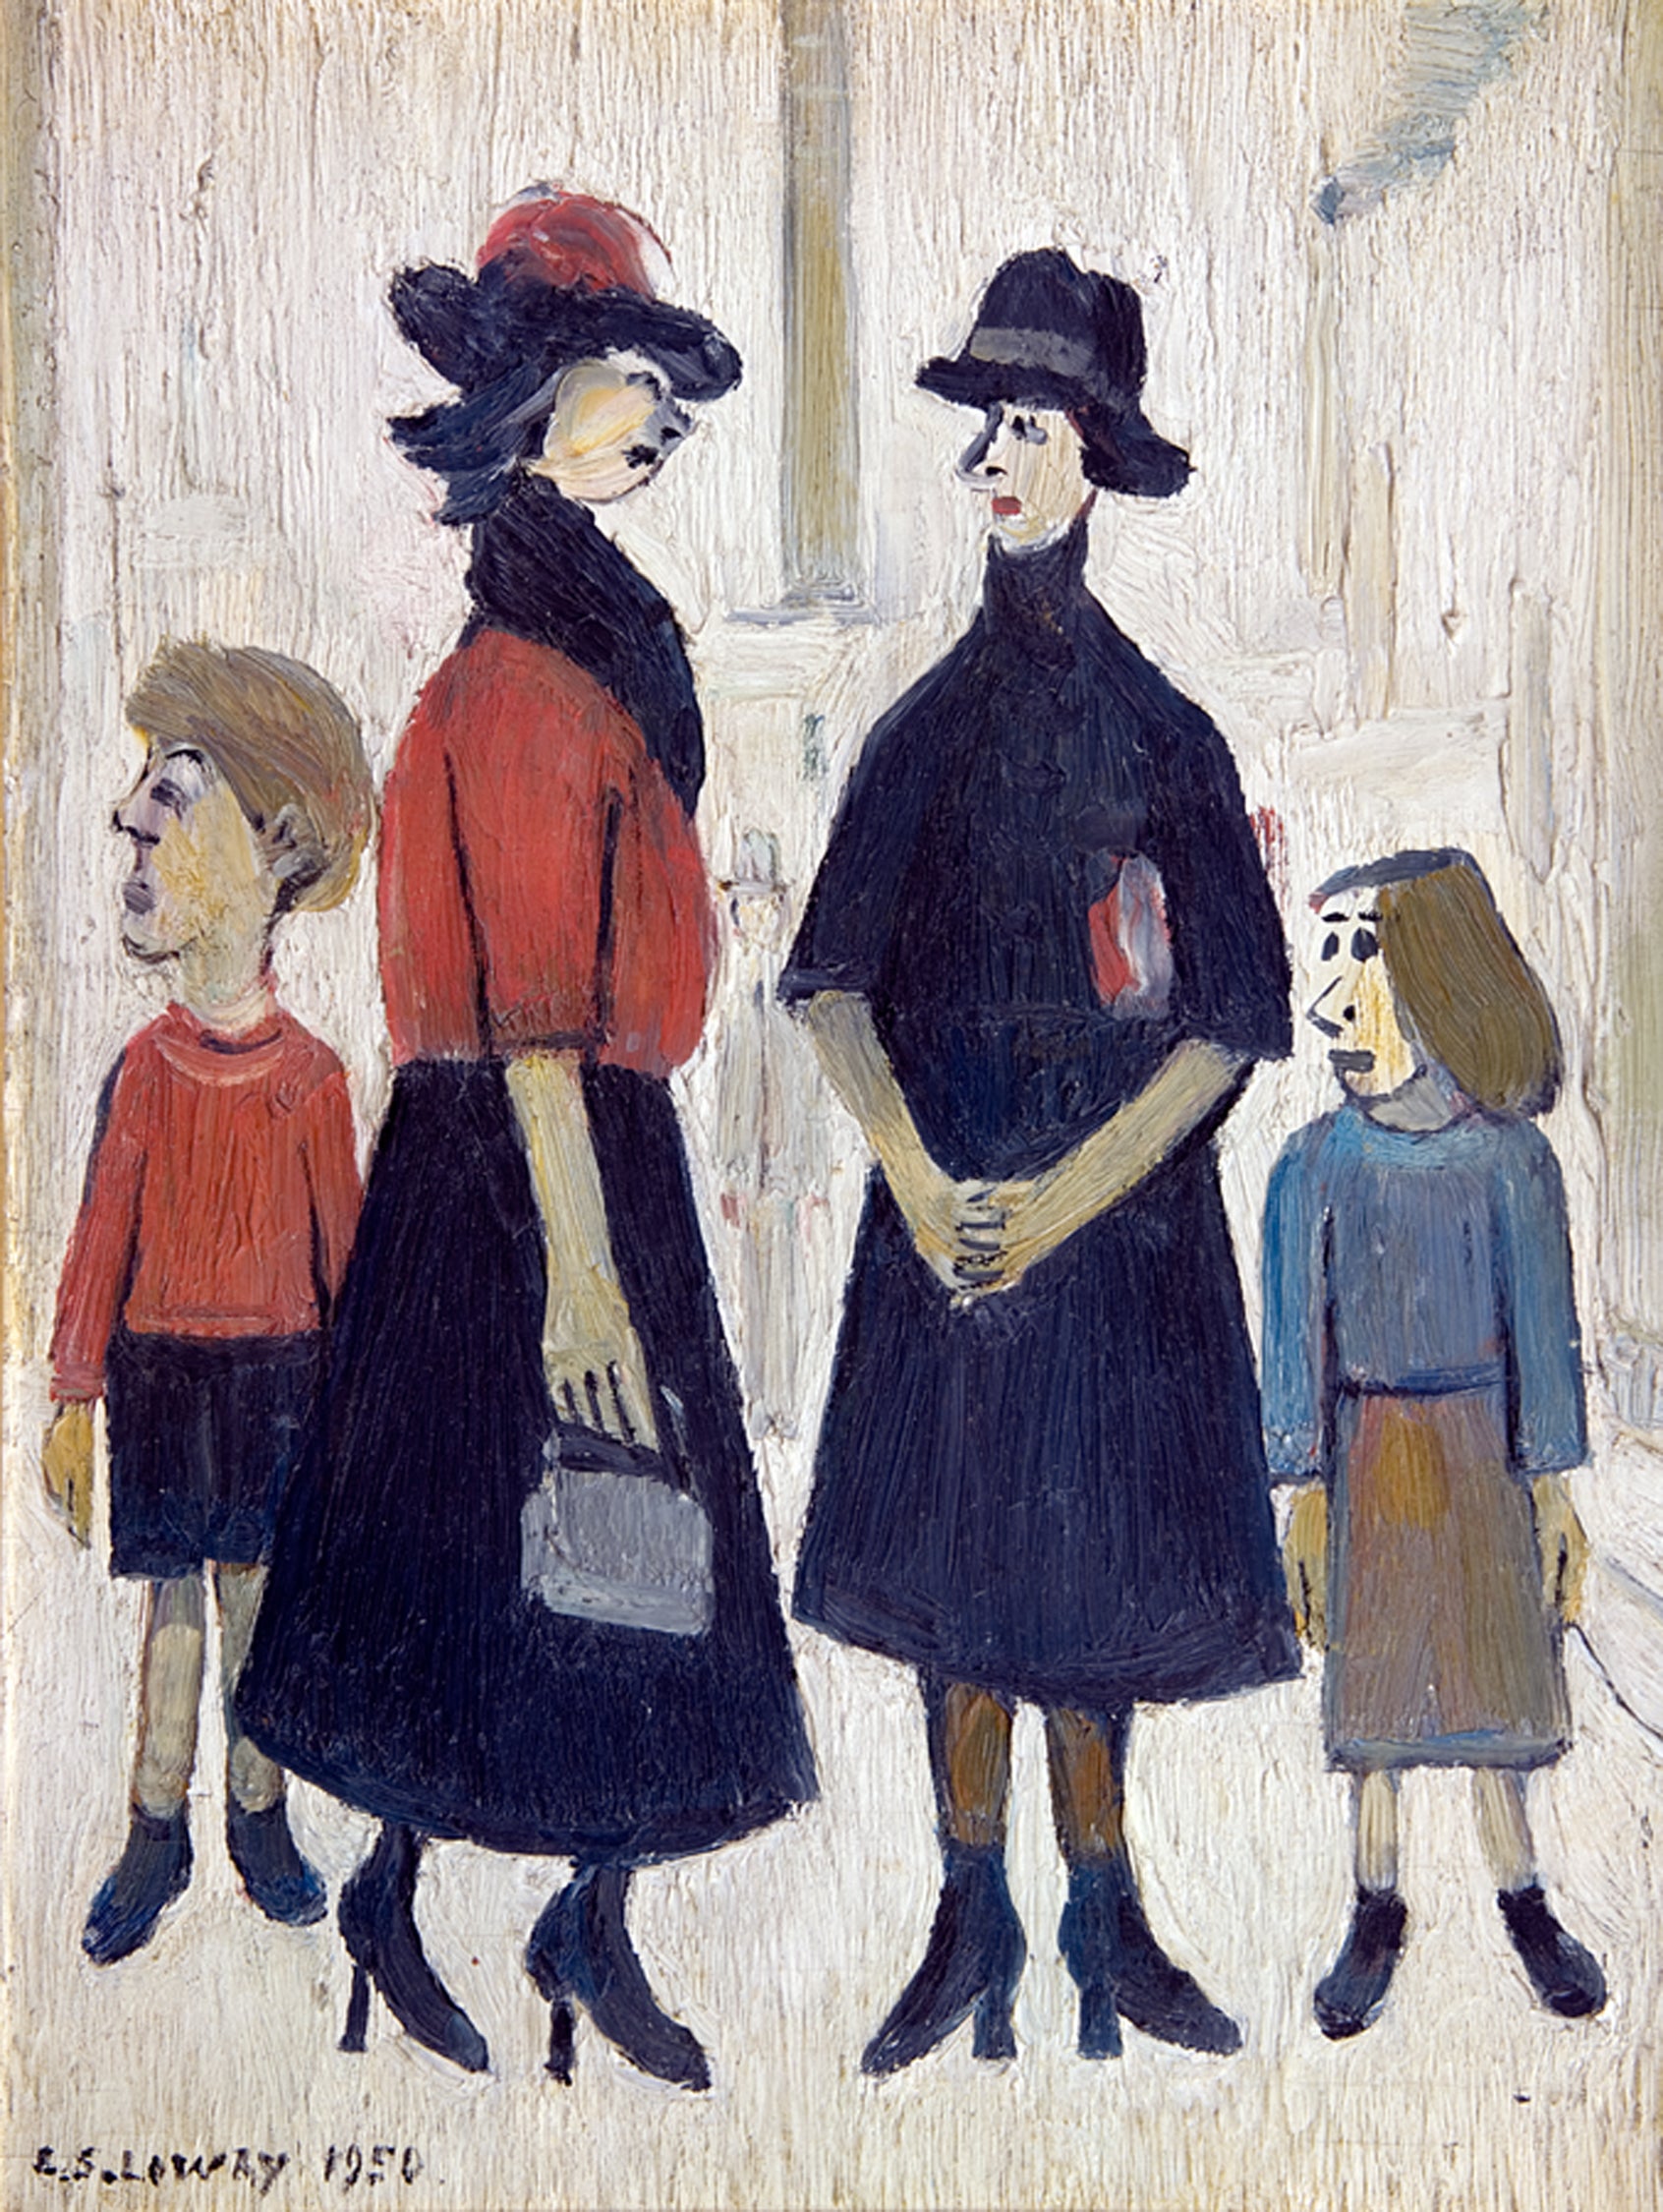 Stolen LS. Lowry, Two women and Children,1950